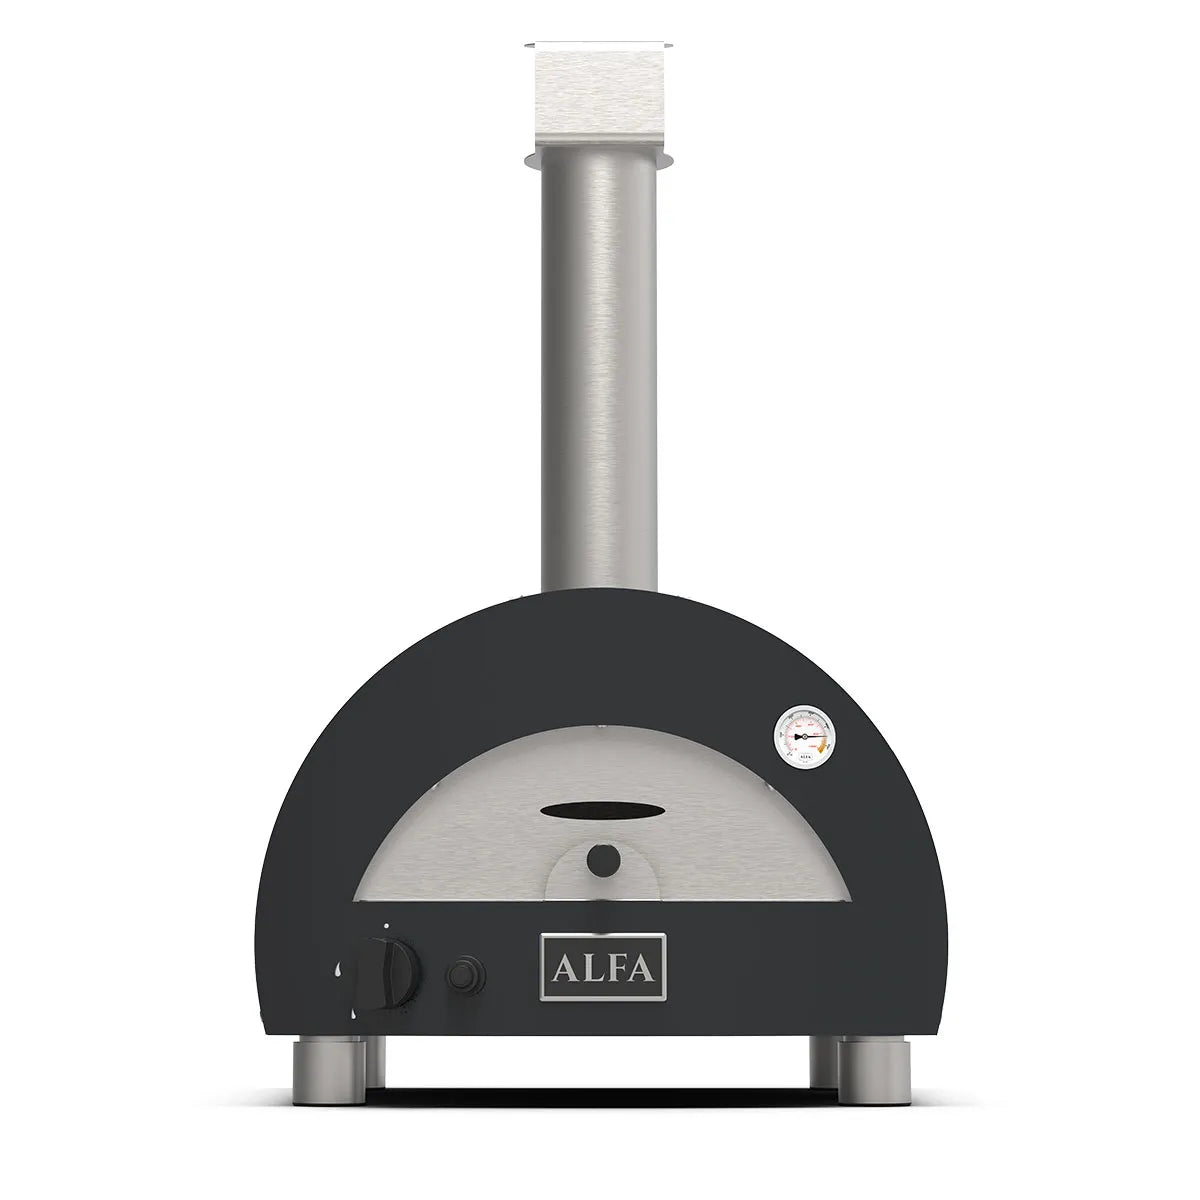 Alfa Portable Pizza Oven Slate Grey